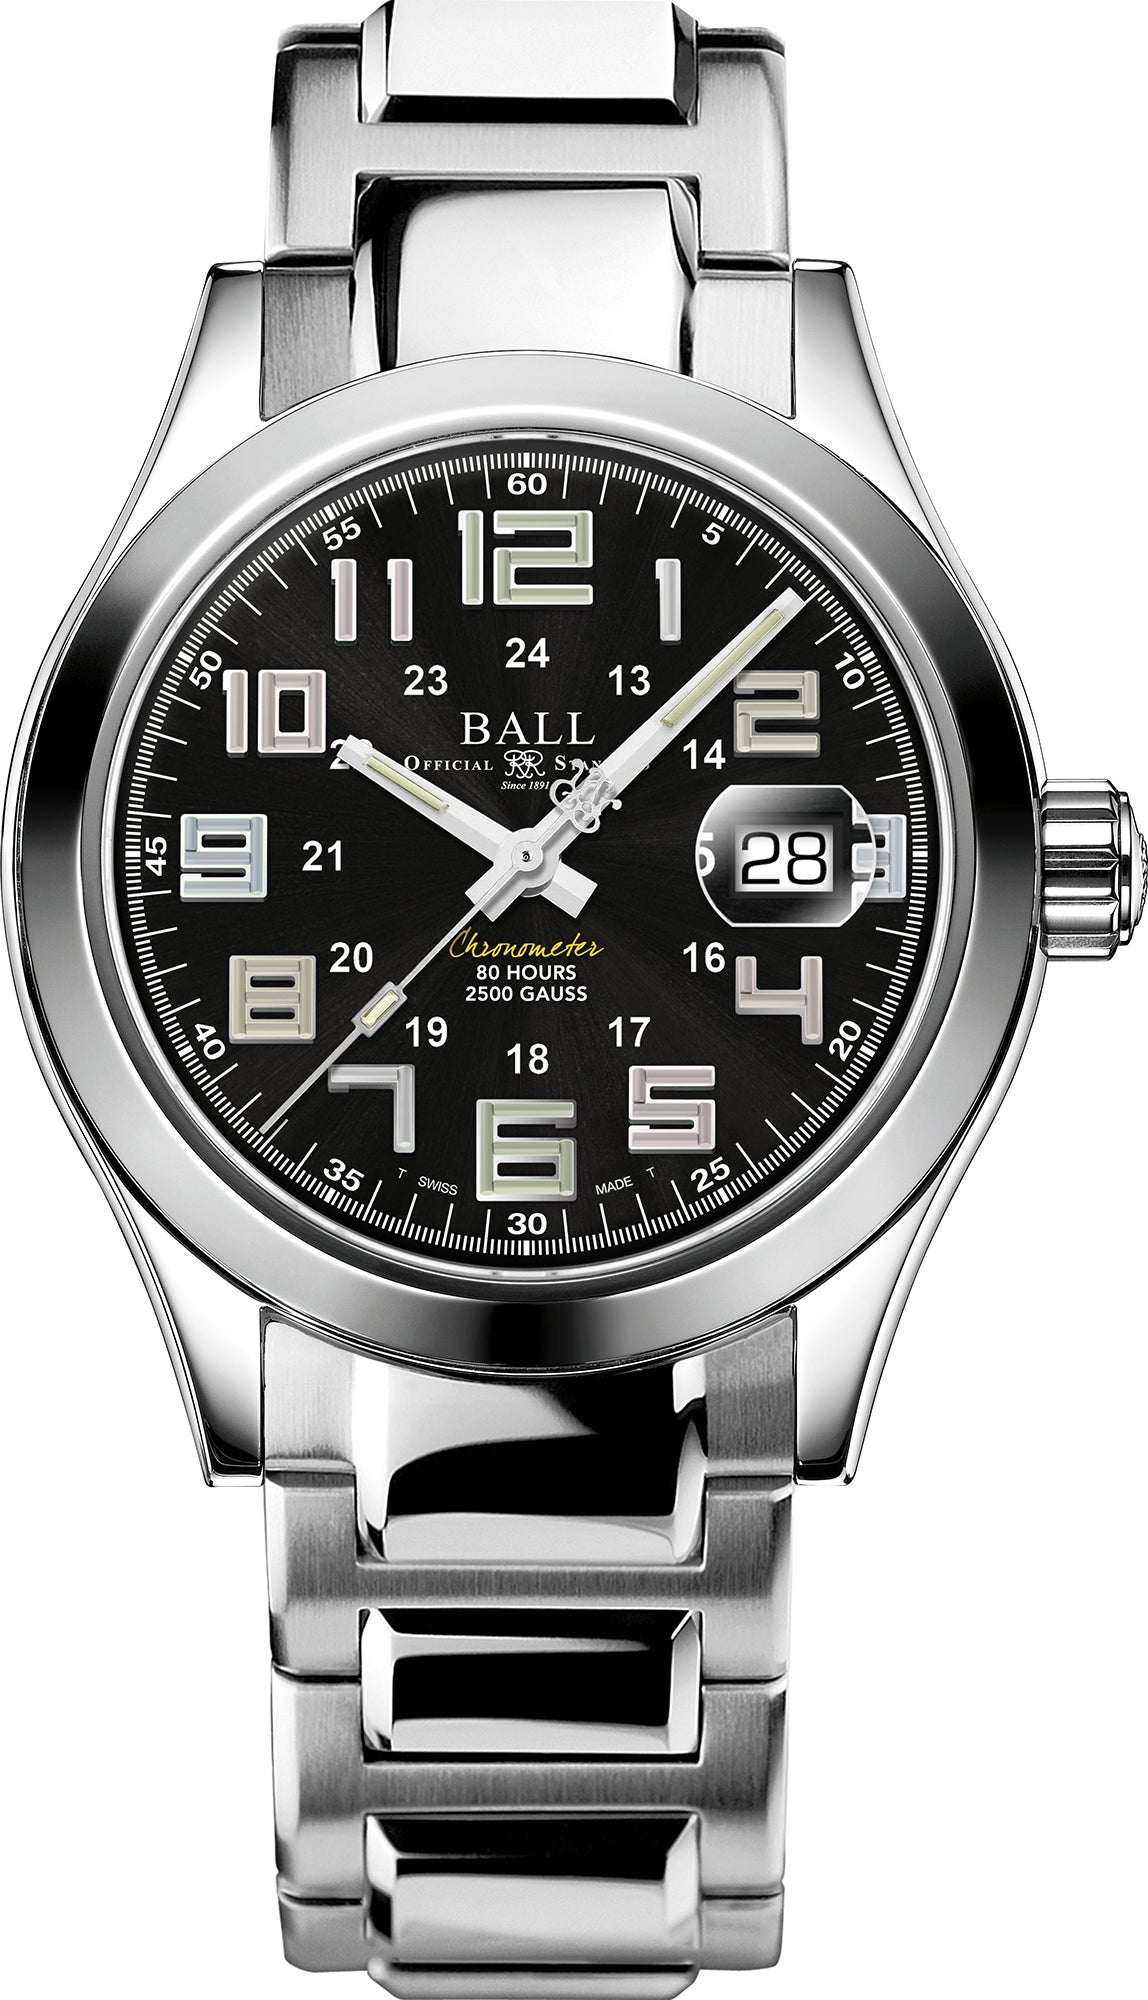 Photos - Wrist Watch Ball Watch Company Engineer M Pioneer Limited Edition - Black BL-2367 